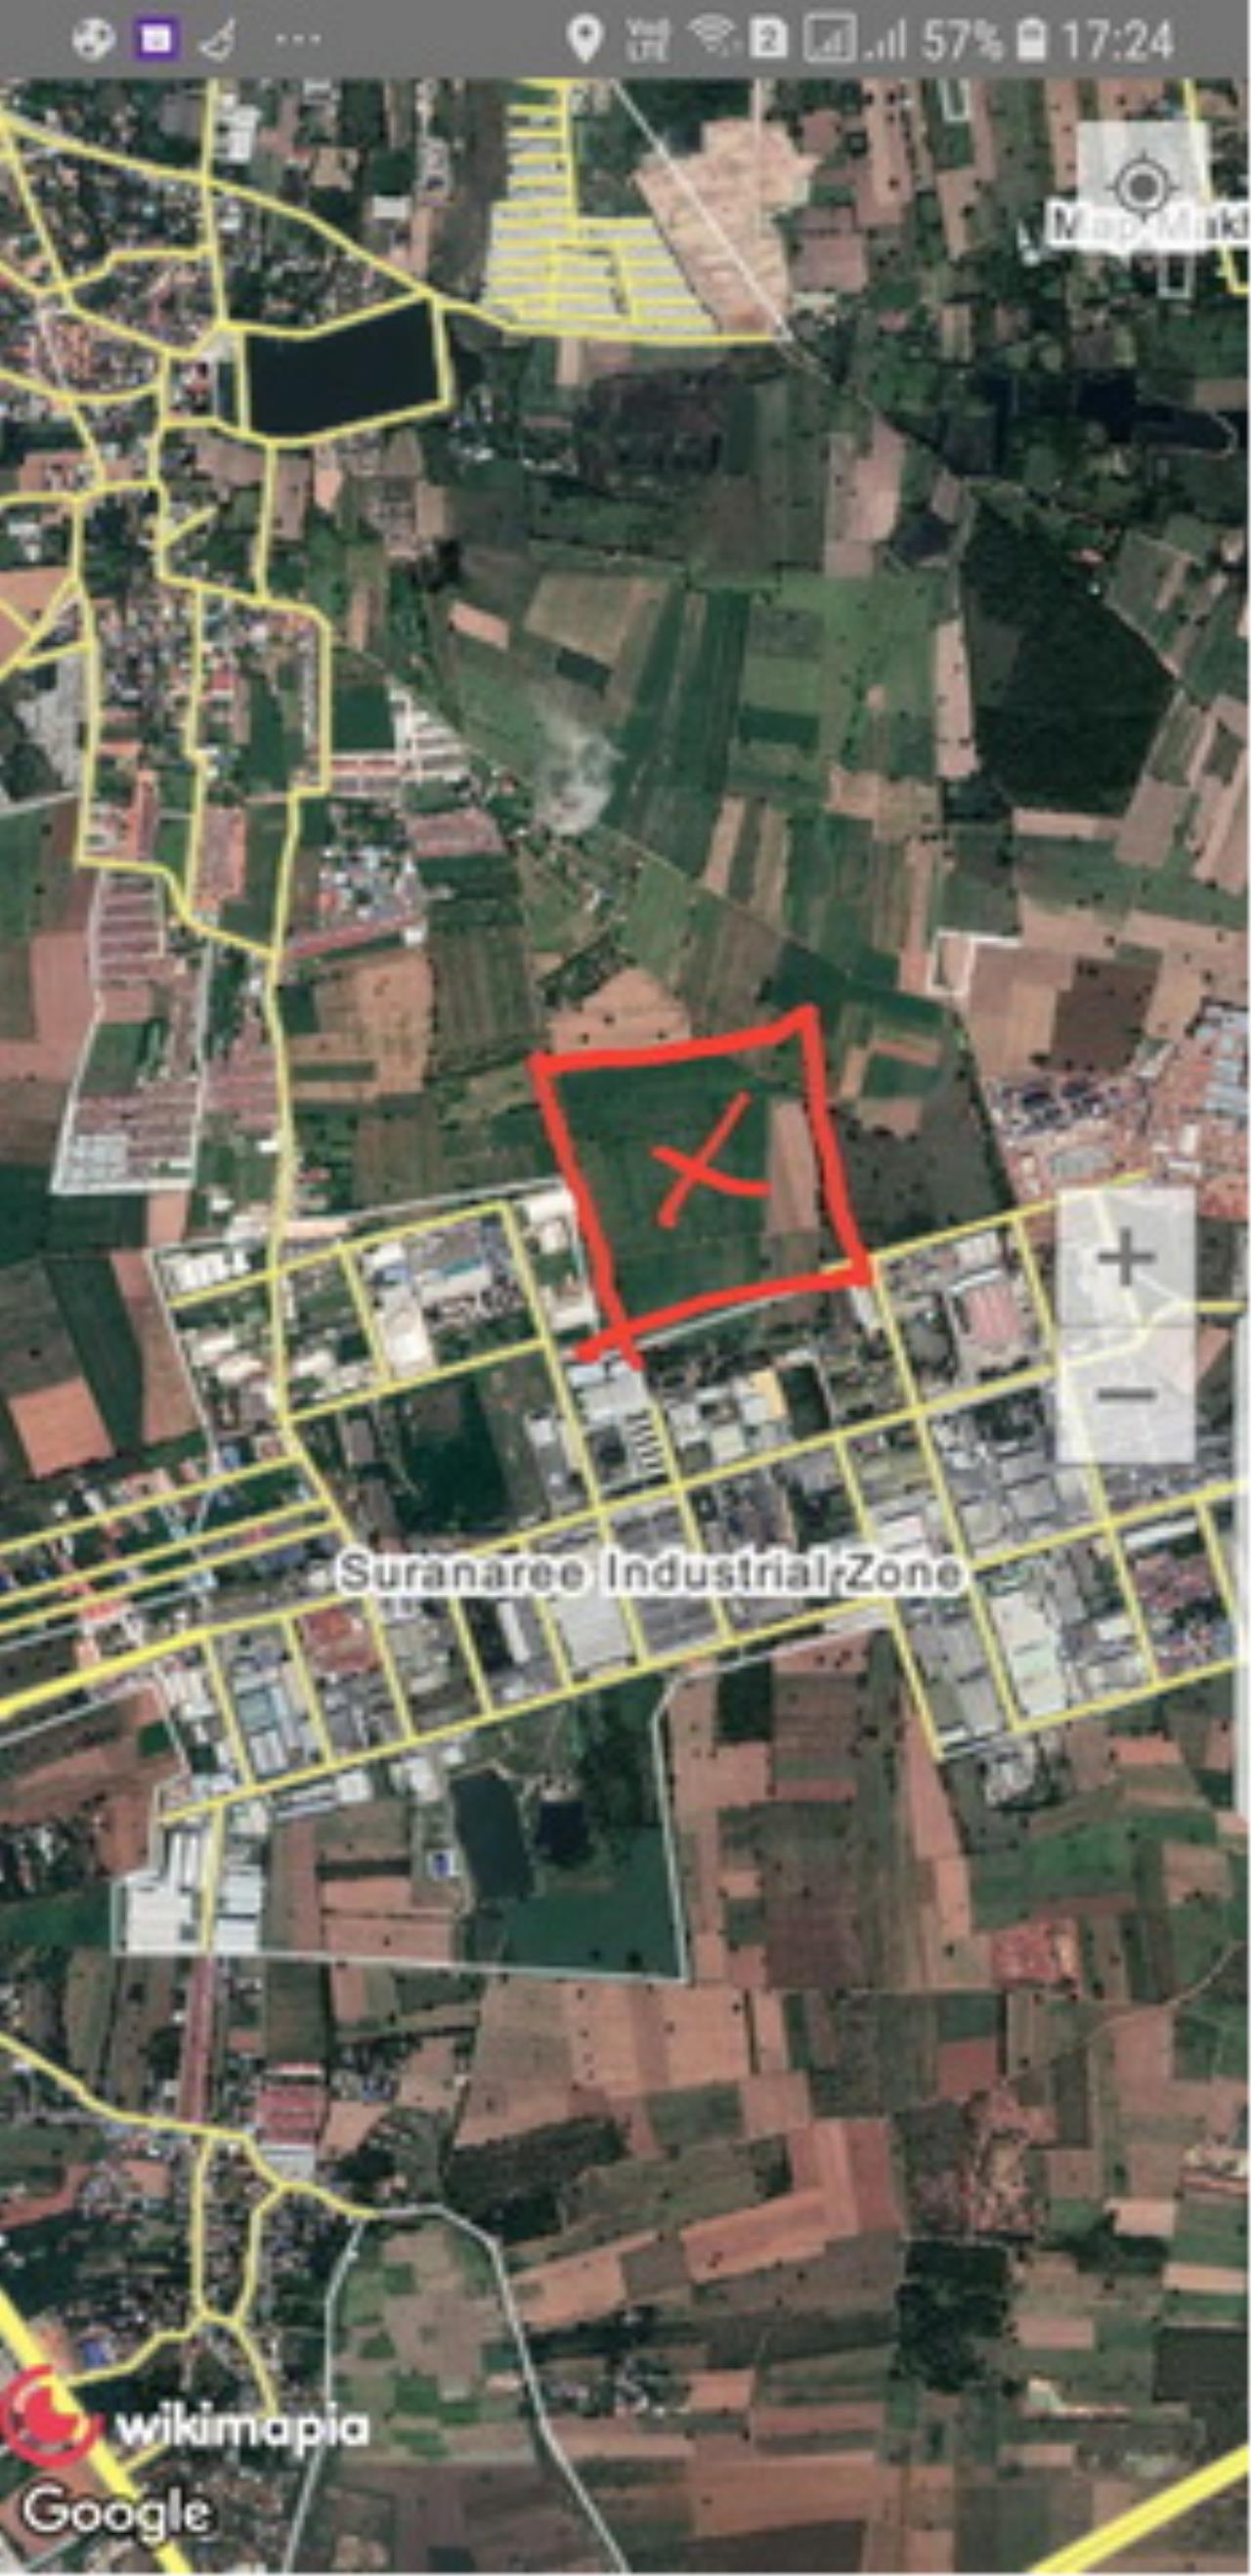 38755 - Suranaree Industrial Estate project Land for sale area 58 acres, ภาพที่ 4